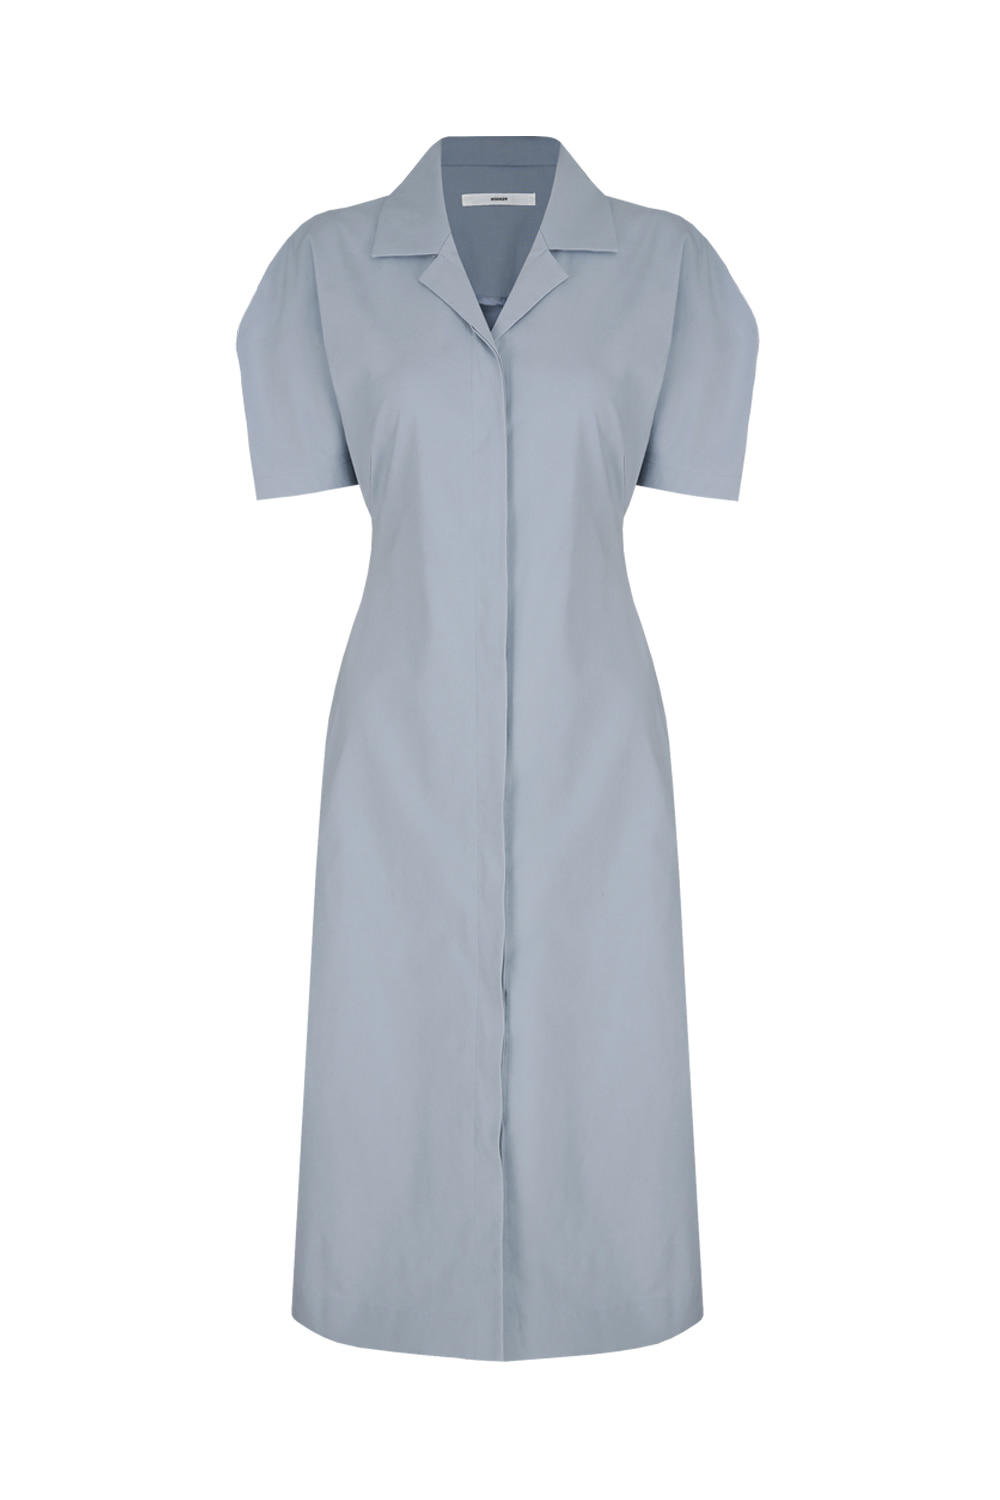 Dolman sleeve shirt dress_Greyish blue